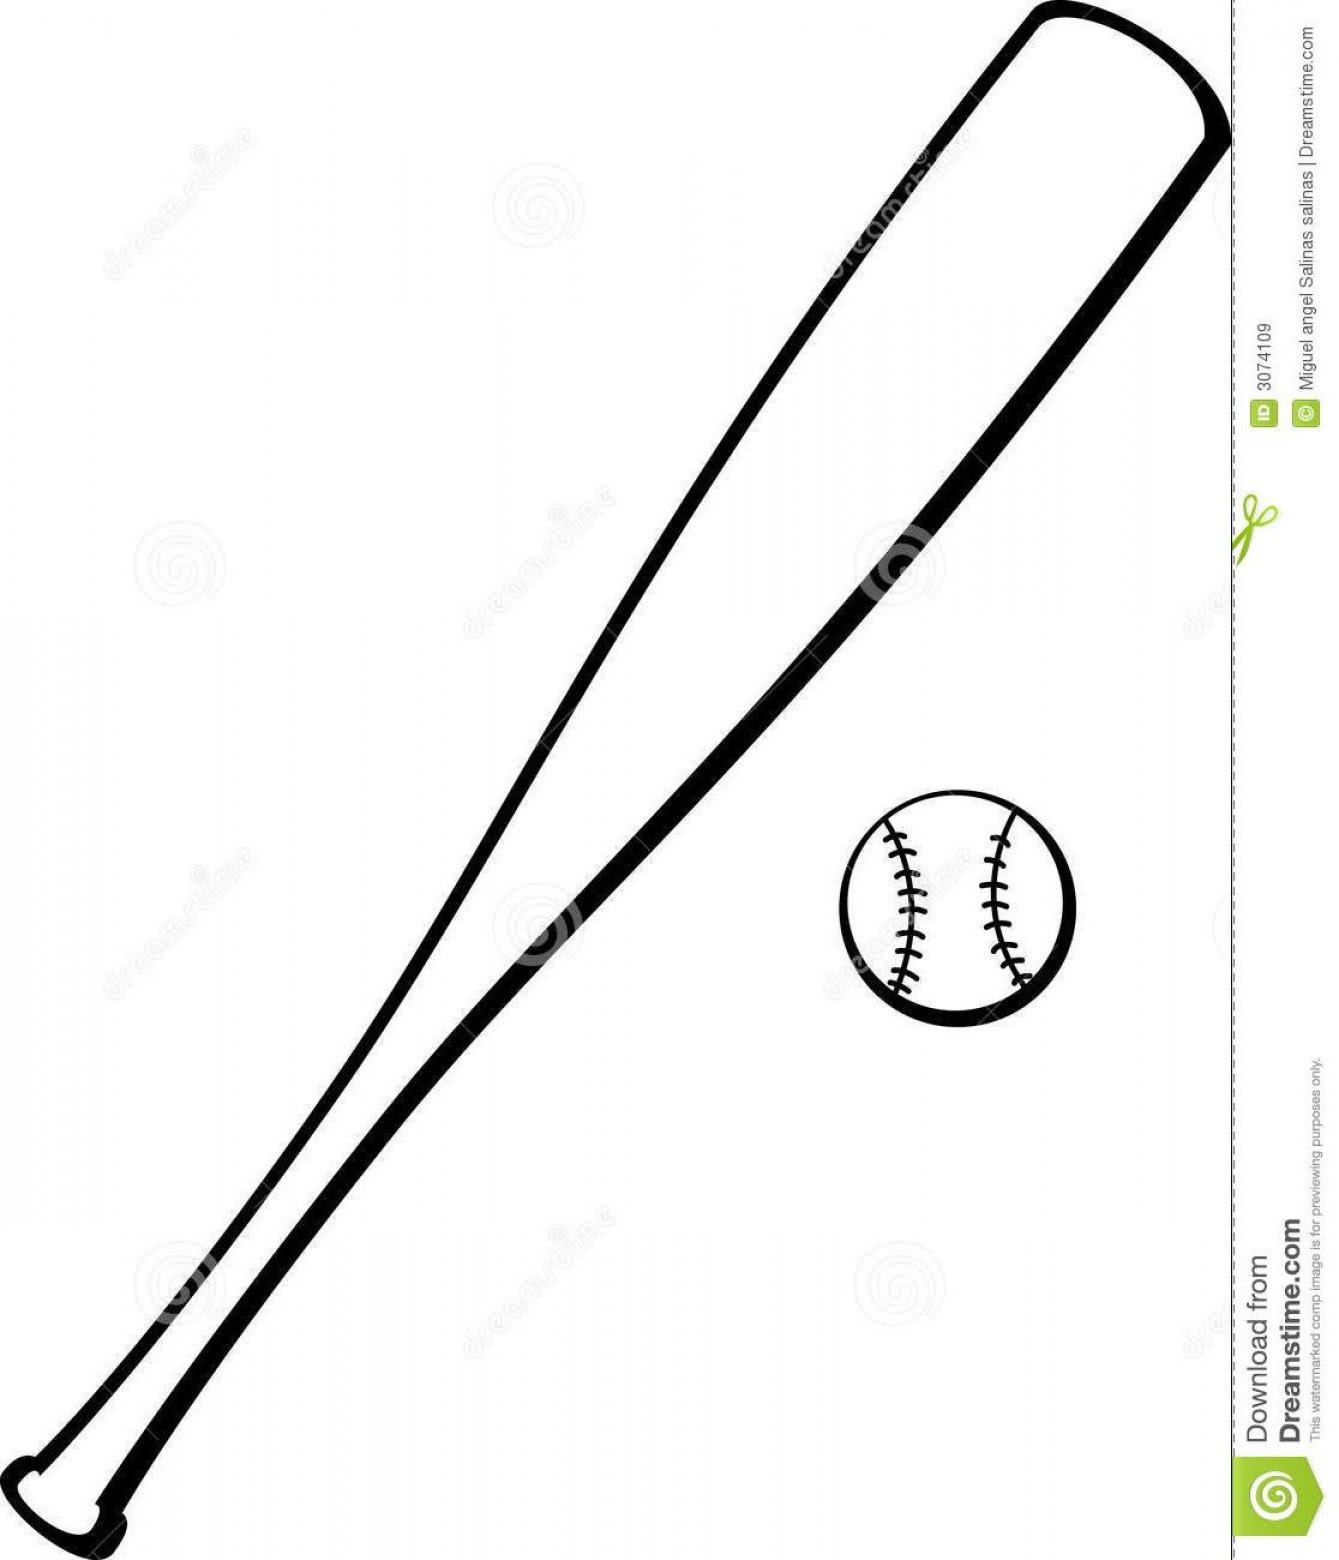 Featured image of post Softball Bat Drawing Easy Baseball grunge equipment or print illustration sport